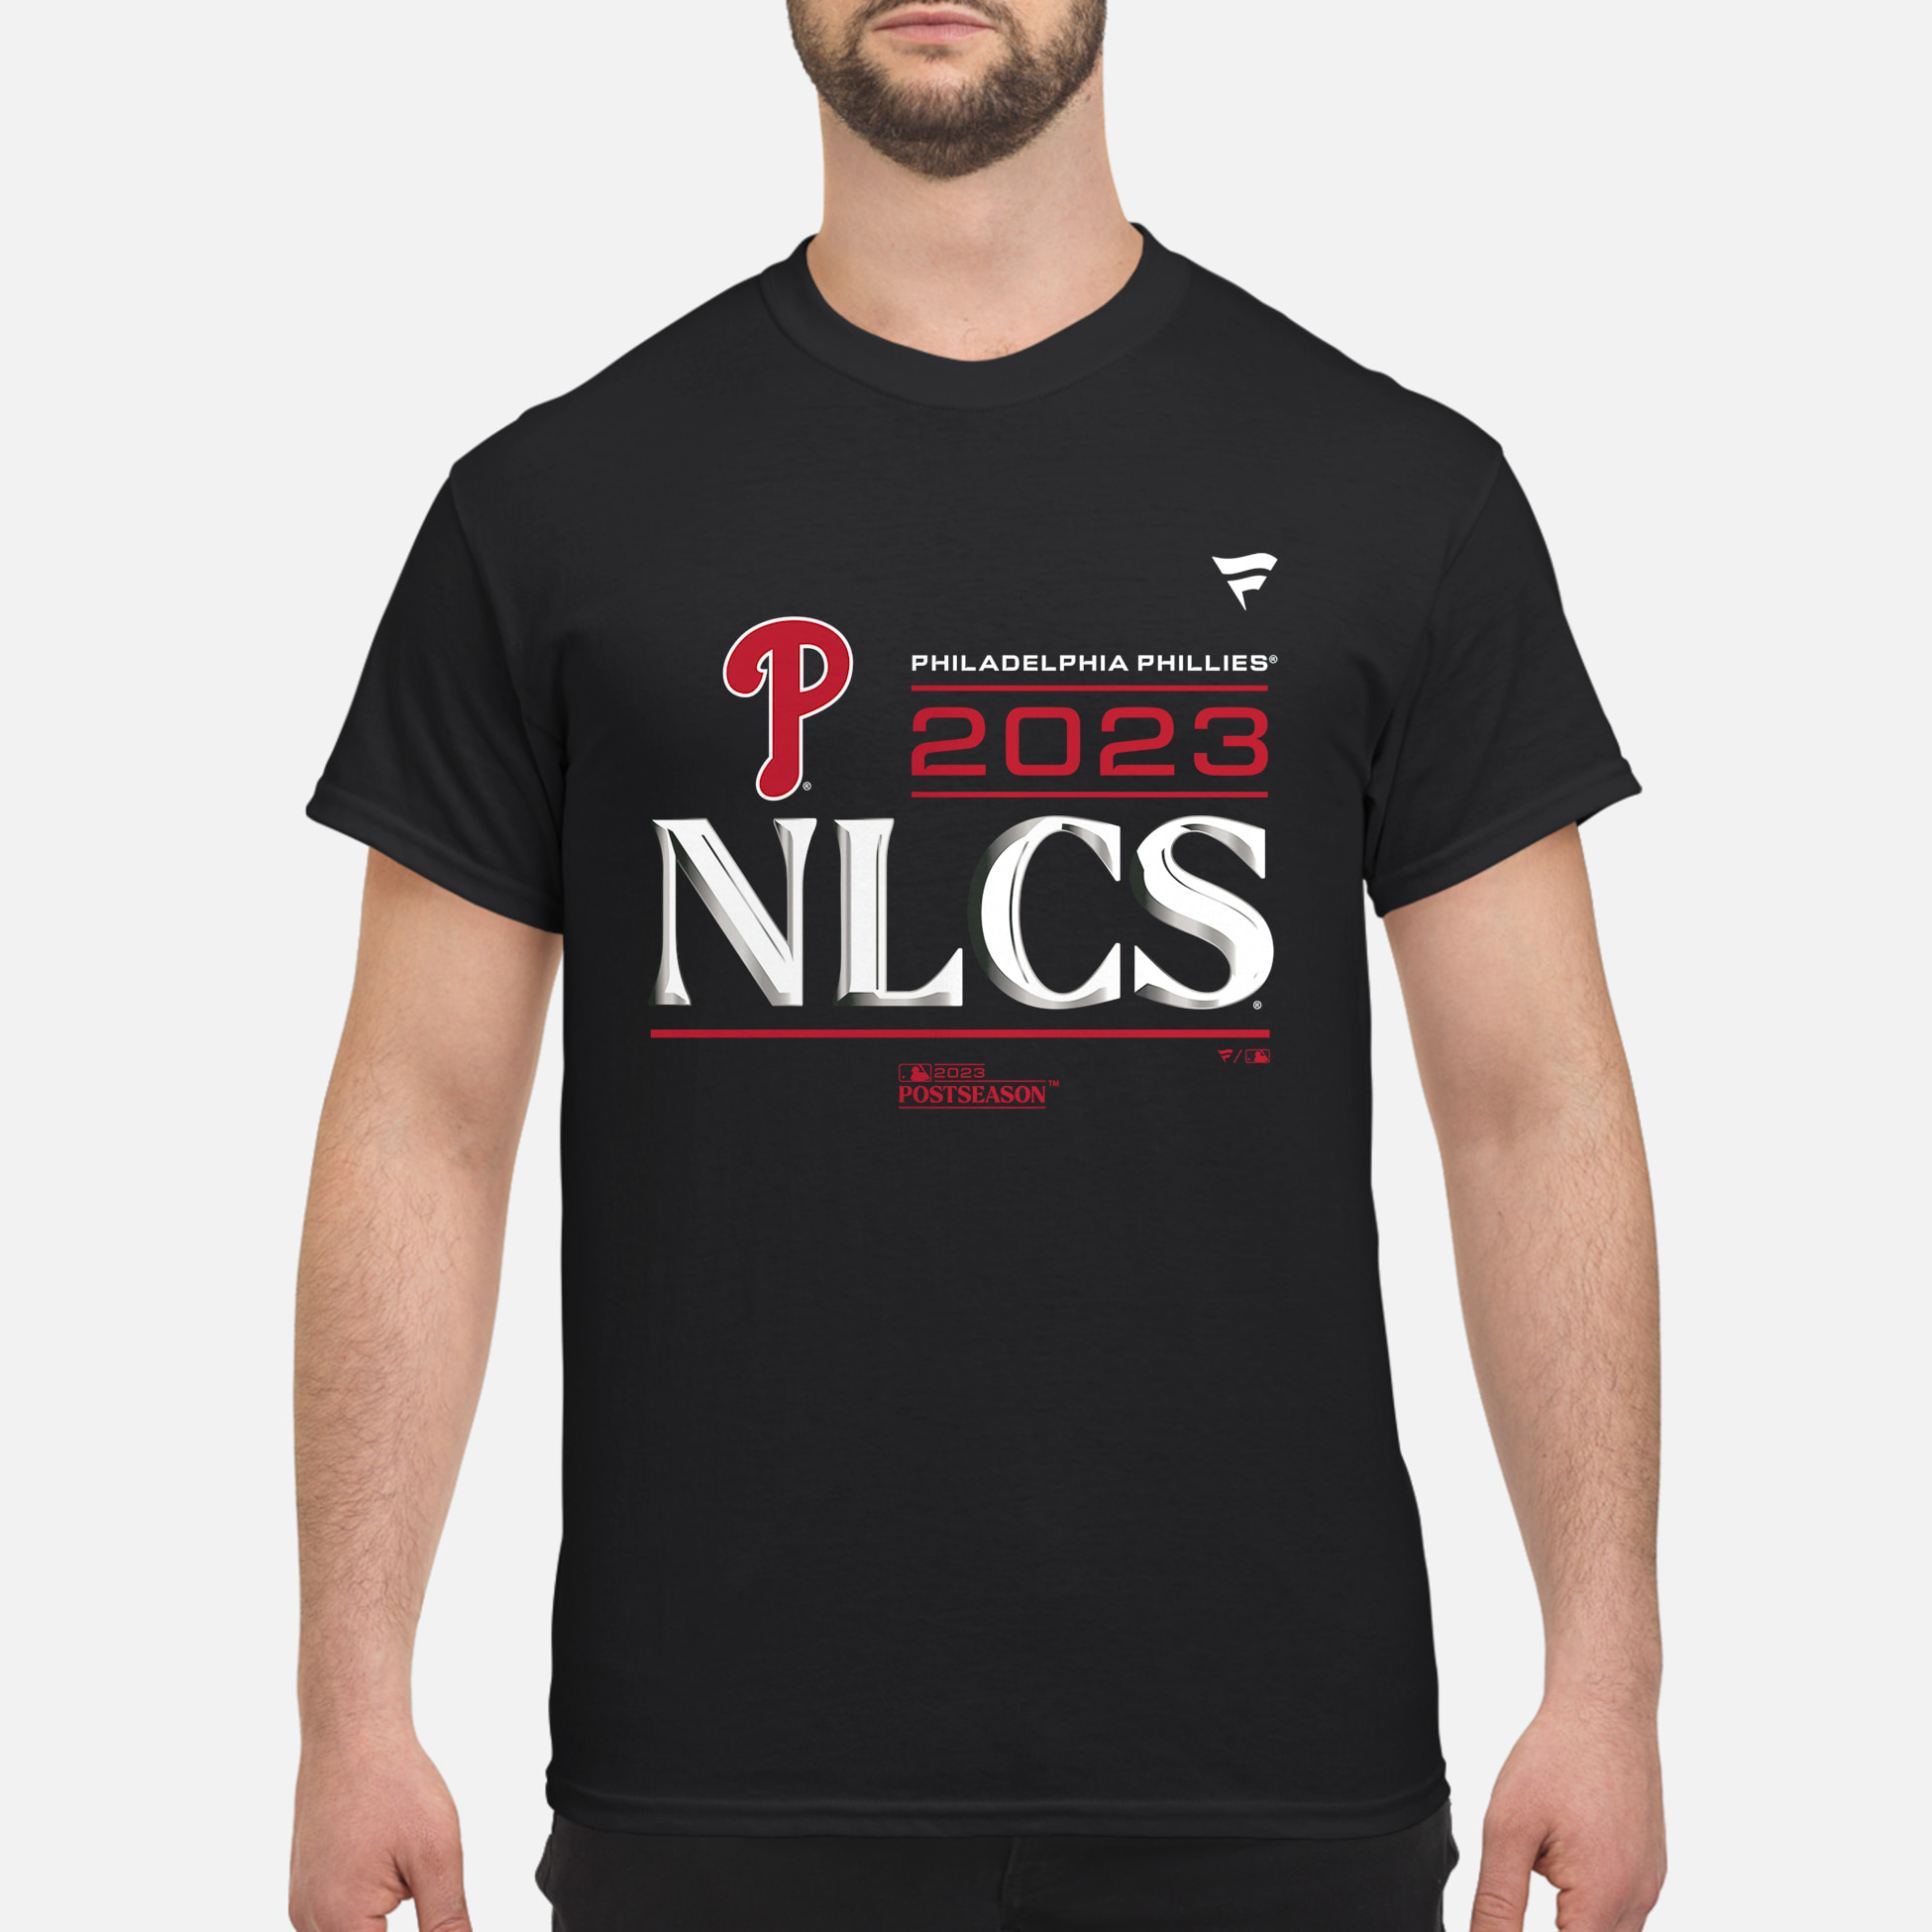 Philadelphia Phillies Nlcs Division Series 2023 Merch TShirt